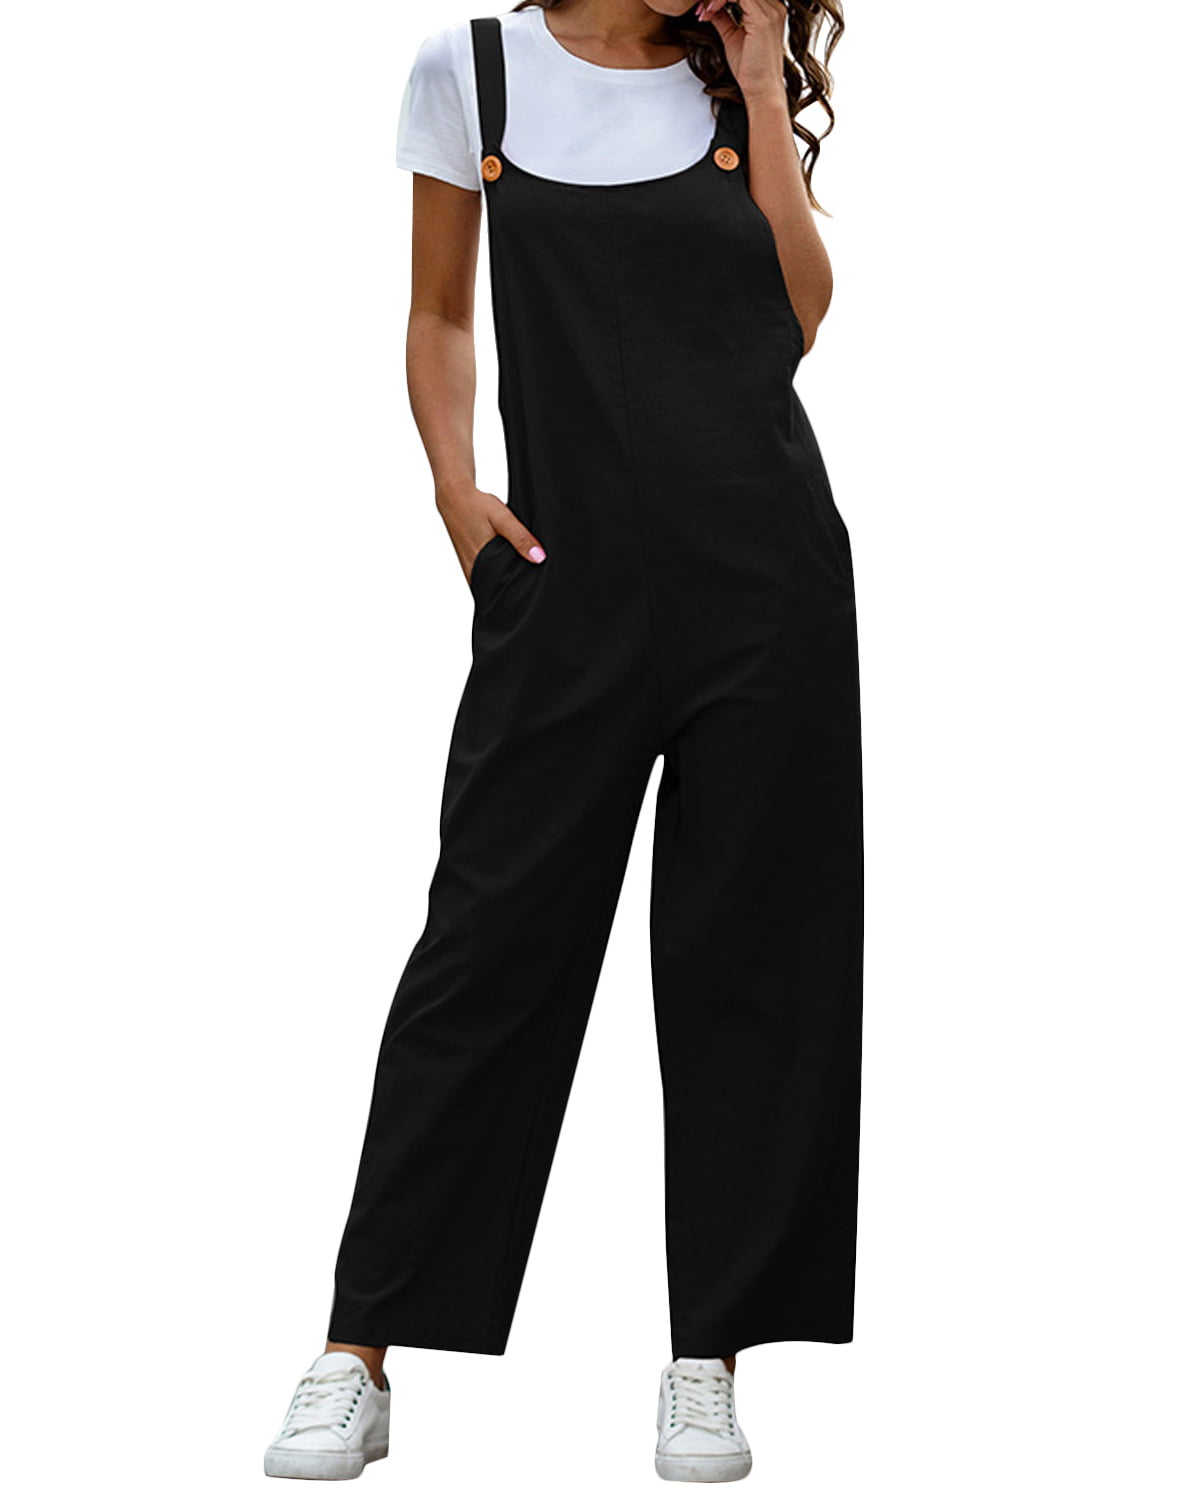 Casual Linen White Women Jumpsuit Solid v Neck Buttons Plus Size Cotton Overalls Straight Jumpsuits,Black,XL